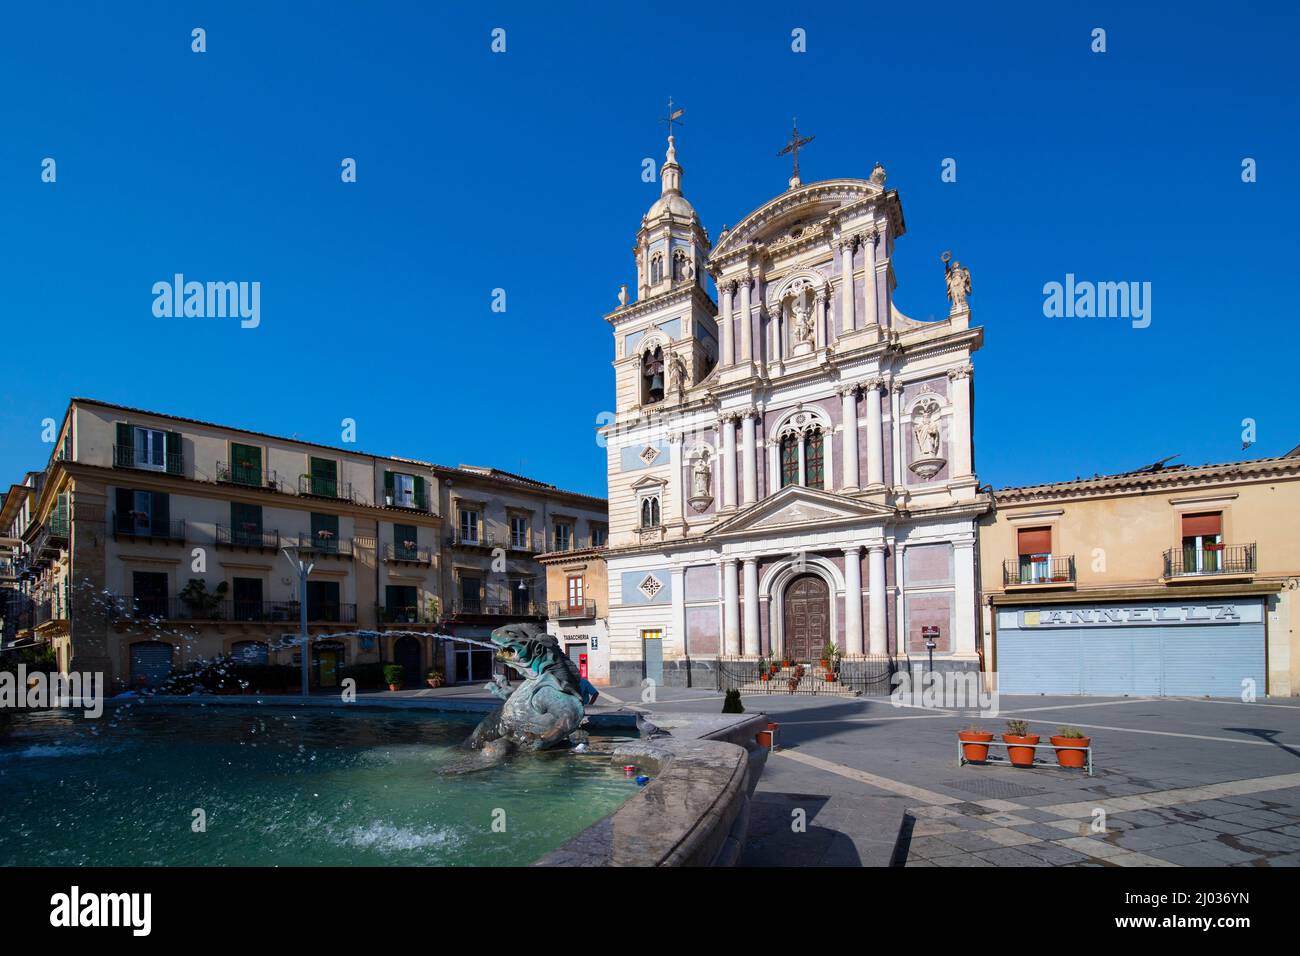 Eglise de Santa Maria la Nova, Piazza Garibaldi, Caltanisetta, Sicile, Italie, Europe Banque D'Images